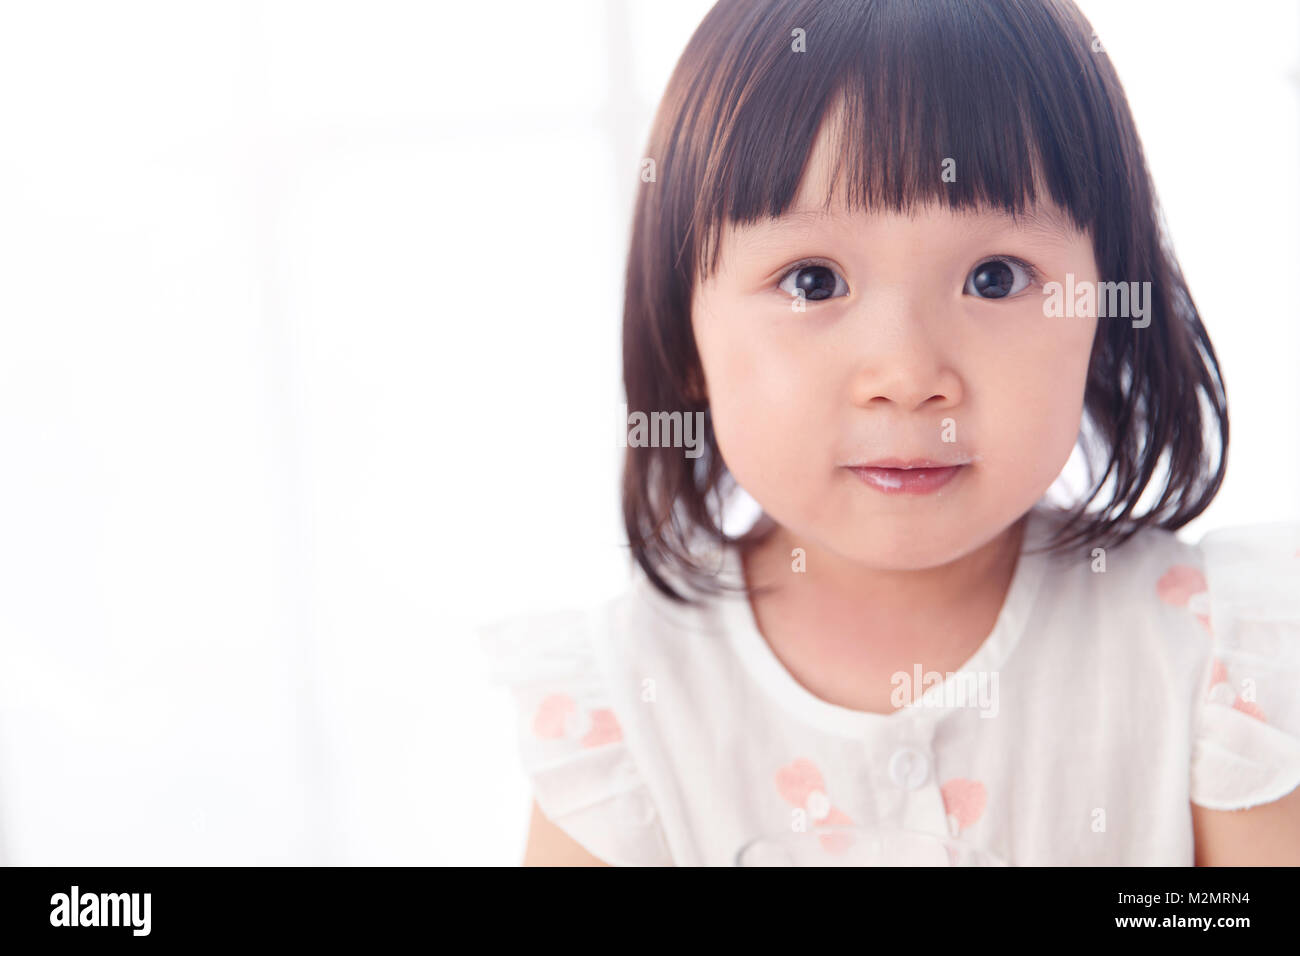 Cute little girl Stock Photo - Alamy